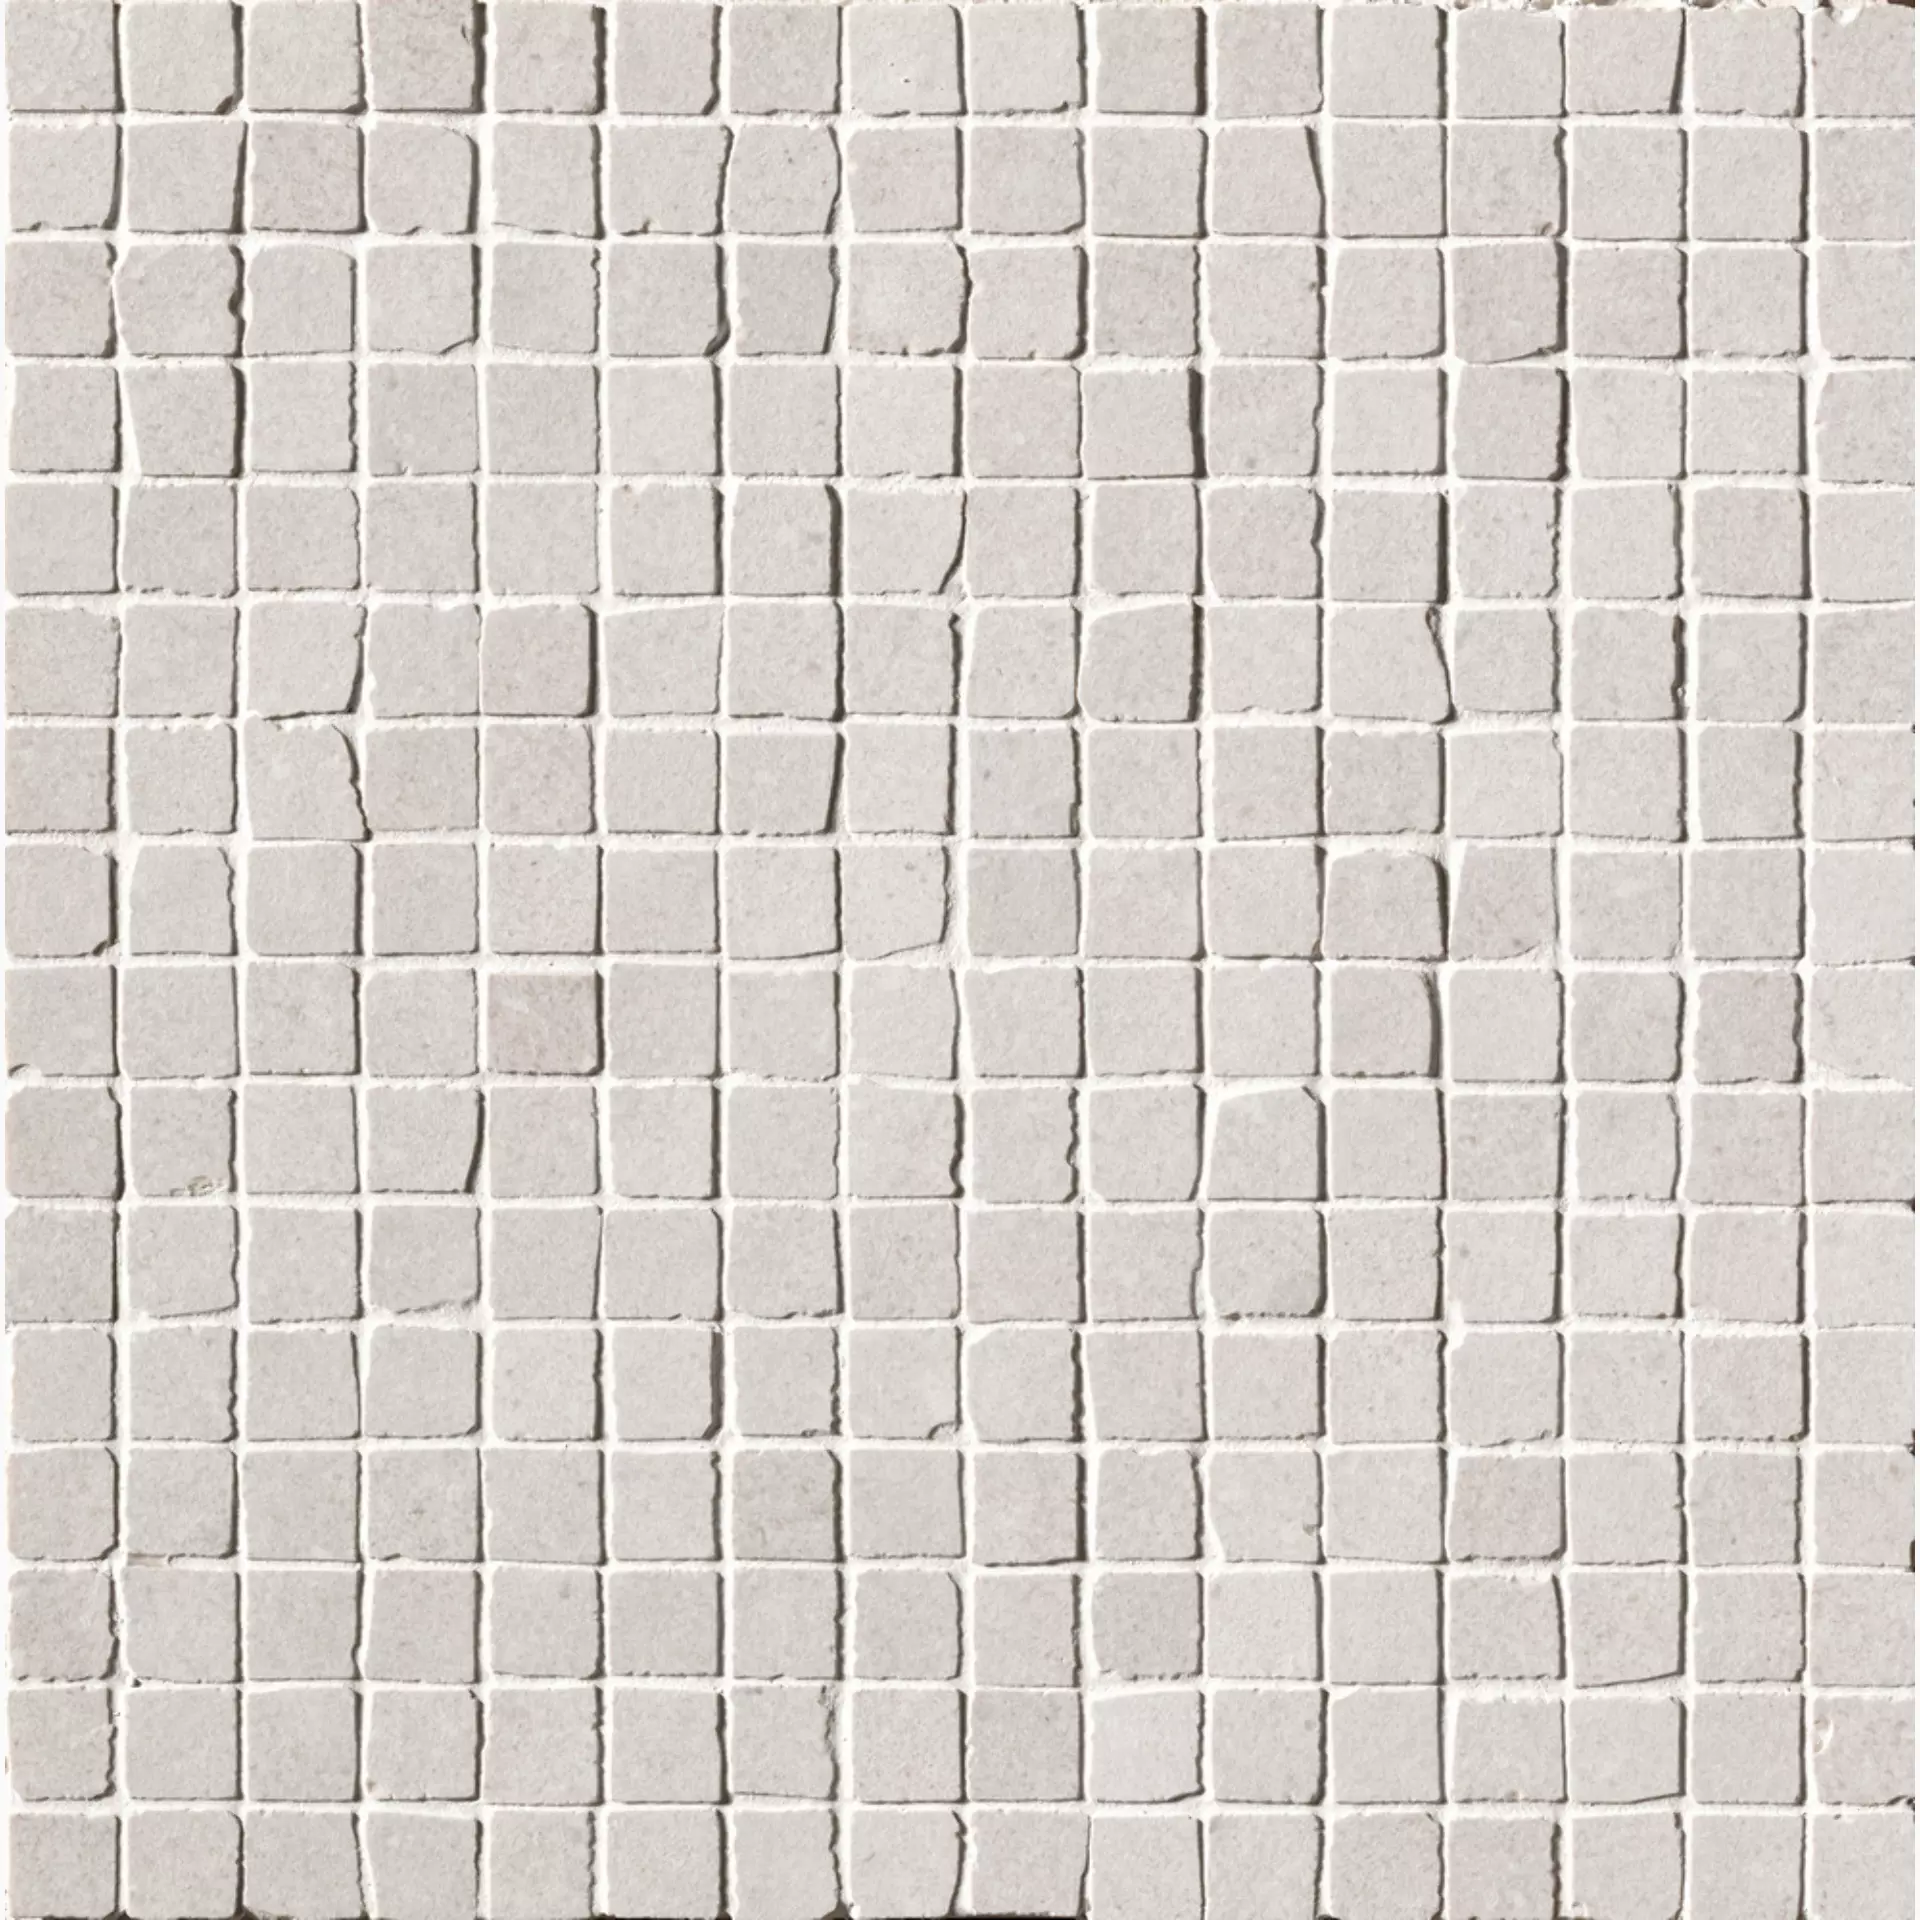 FAP Nux White Anticato White fORT antiquiert 30x30cm Mosaik